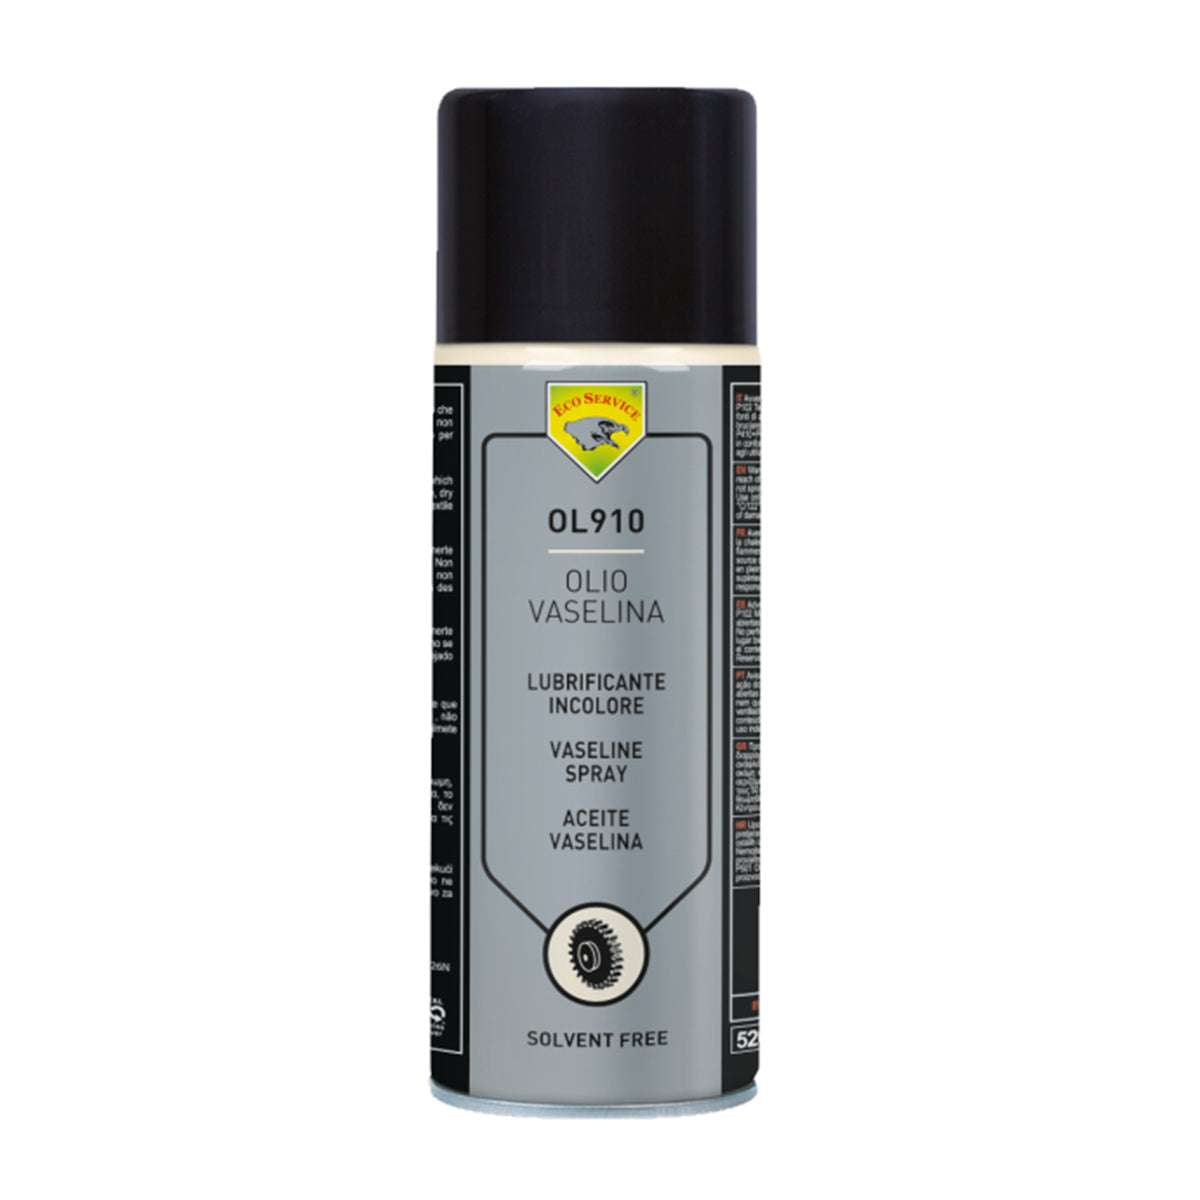 Olio Vaselina Spray 400ml paraffina per lubrificare i macchinari - Eco Service